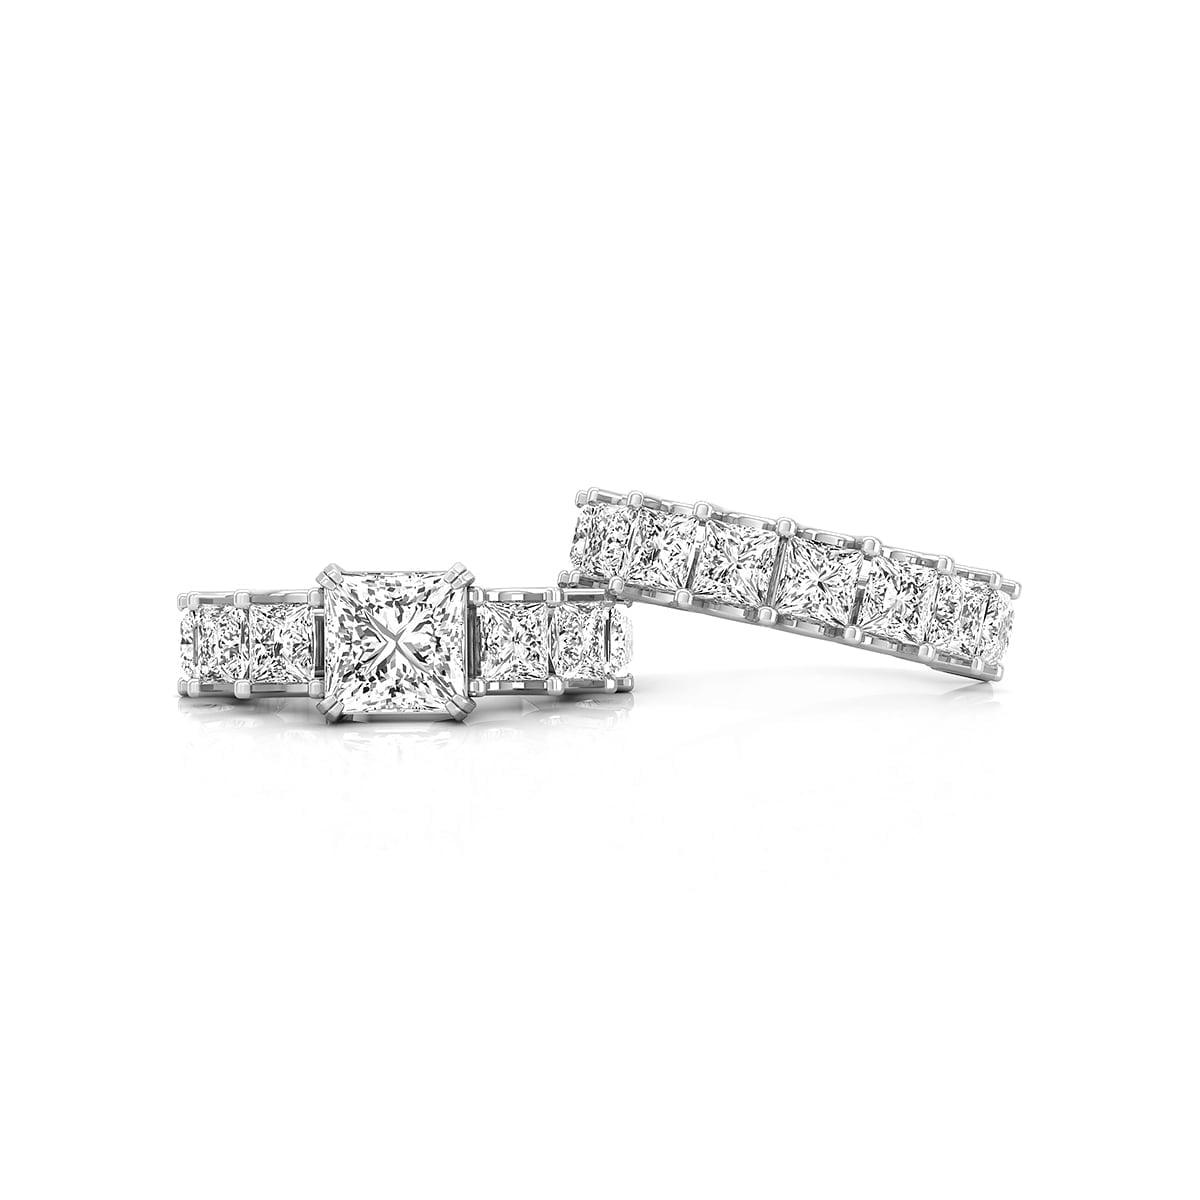 Sparkling White Princess Cut CZ Stone Stackable Wedding Bridal Ring Set (7 6/7 TCW)